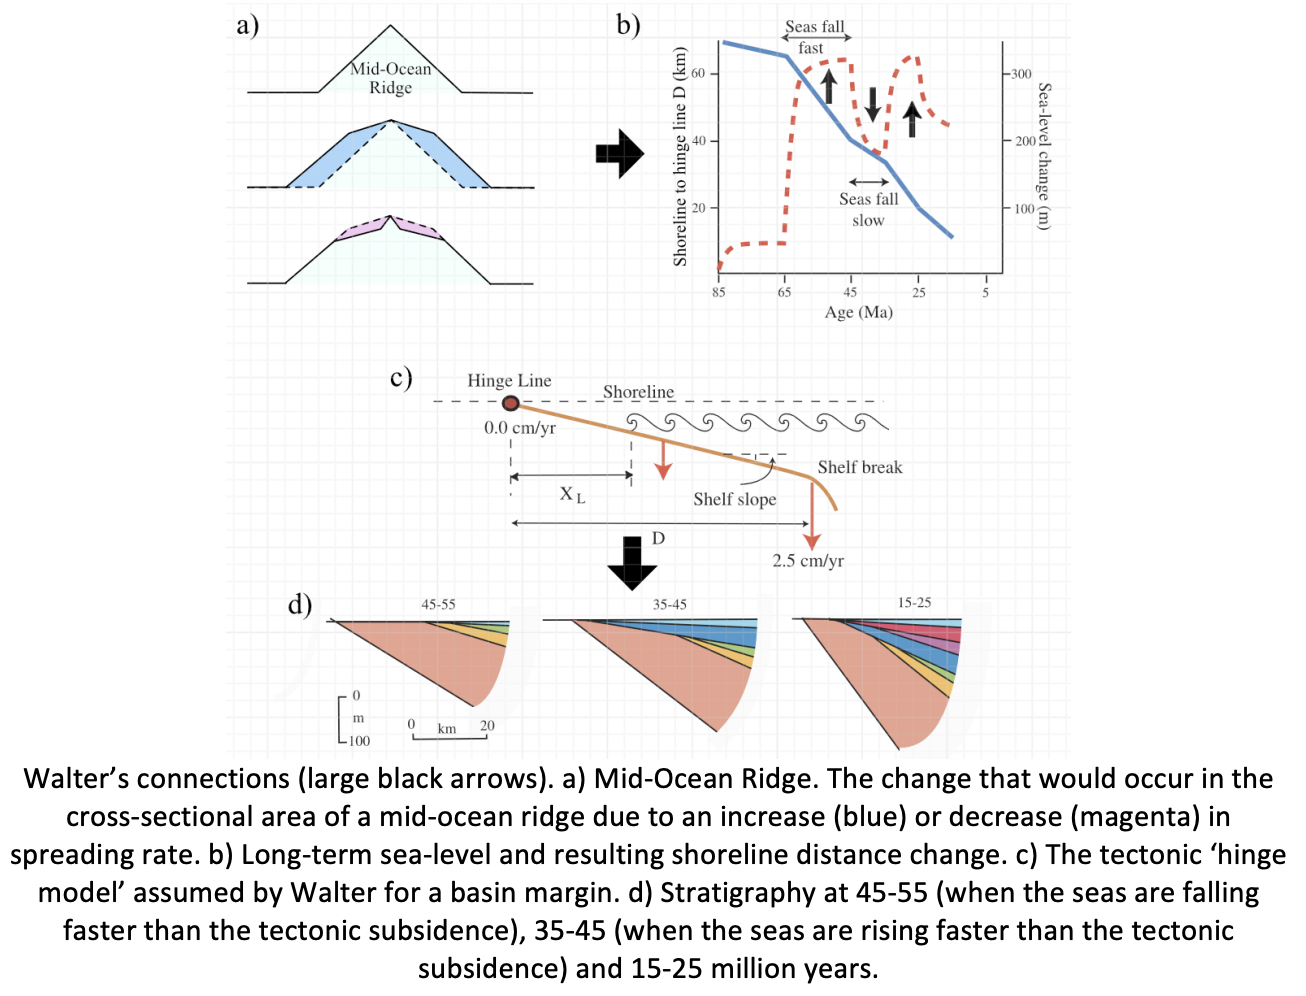 images of mid-ocean ridge, long-term sea level, stratigraphy